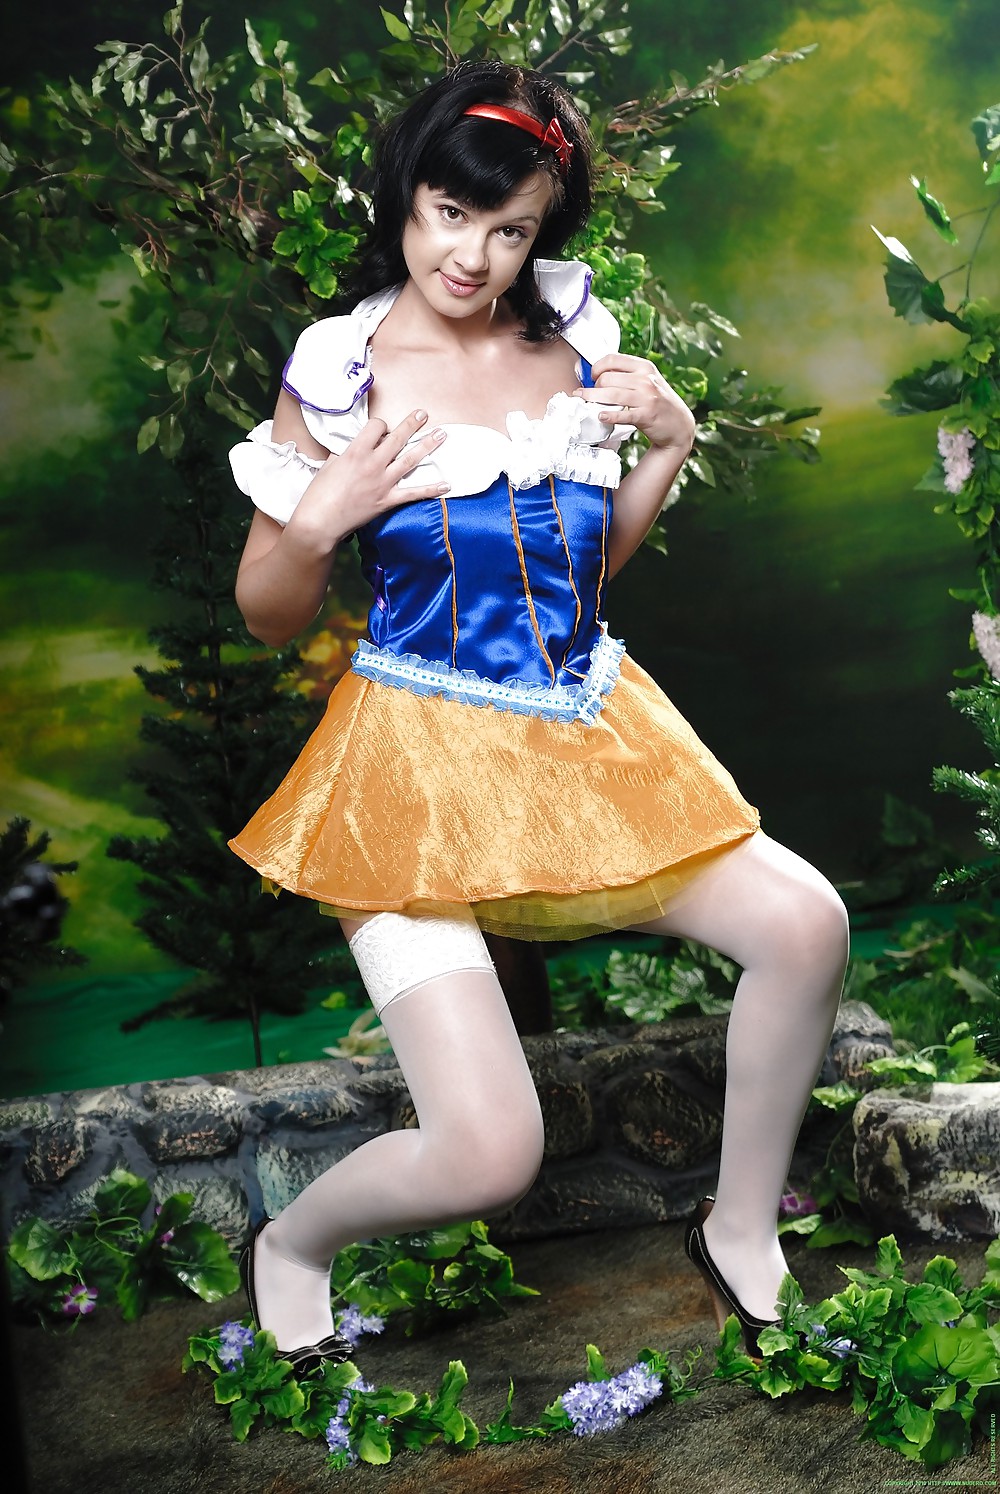 The virgin Snow White #18485216